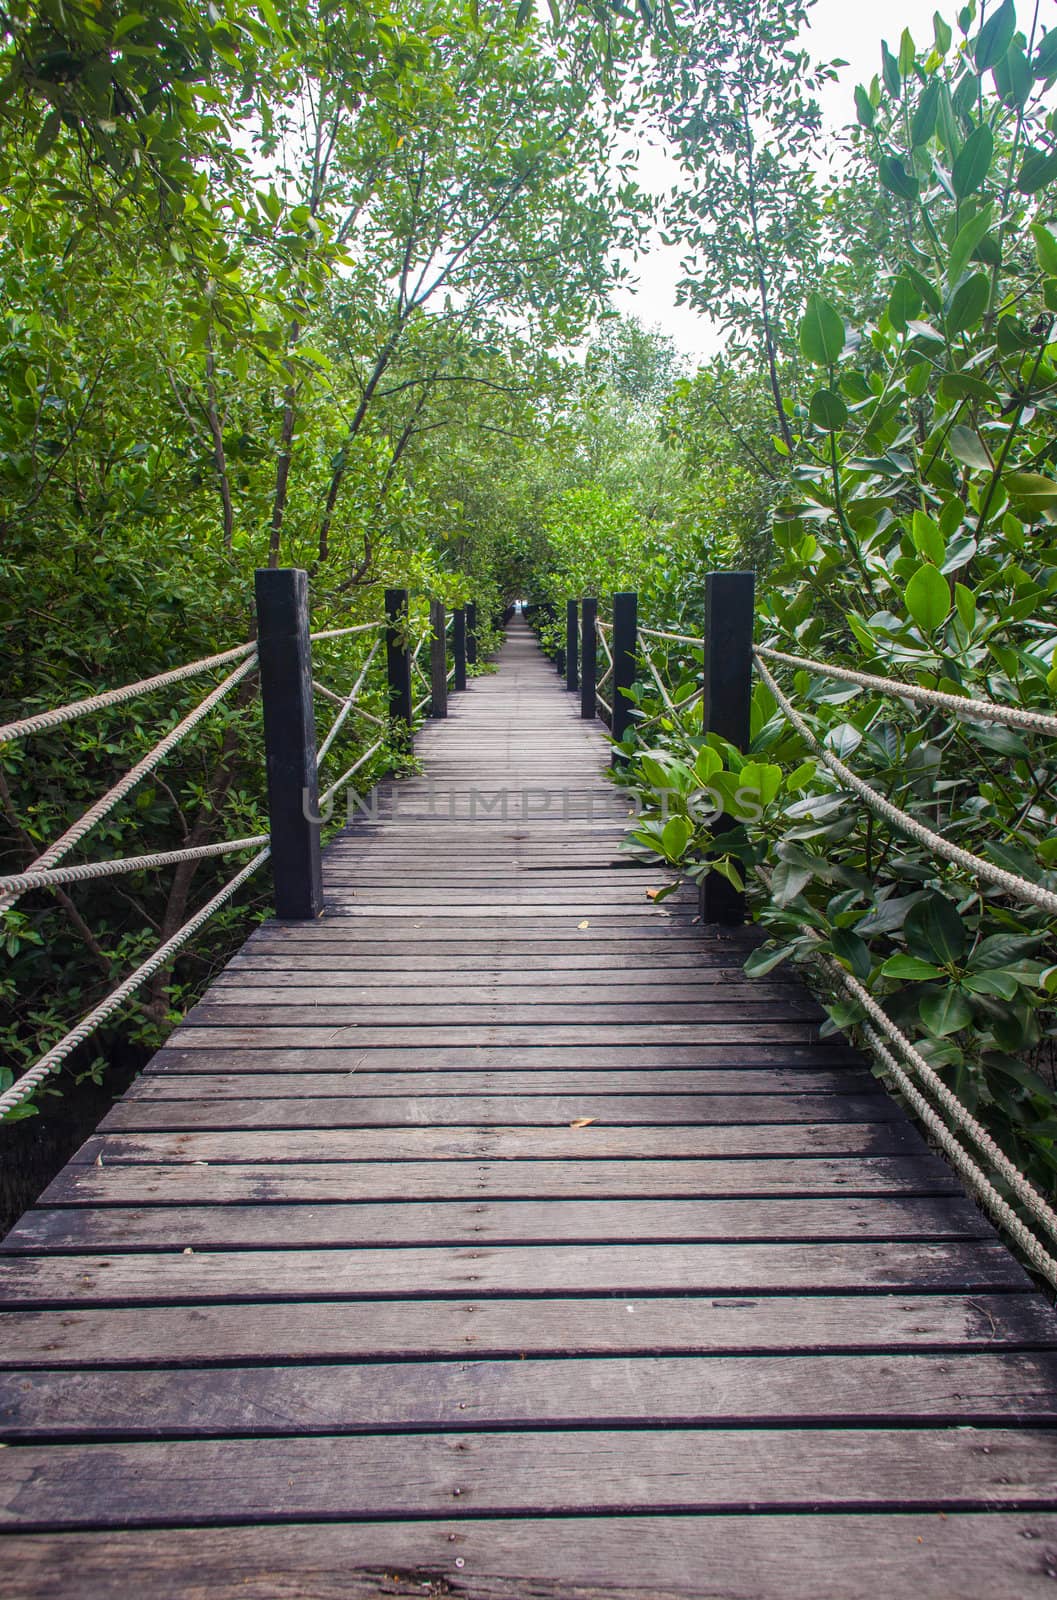 Mangrove forest by thanatip